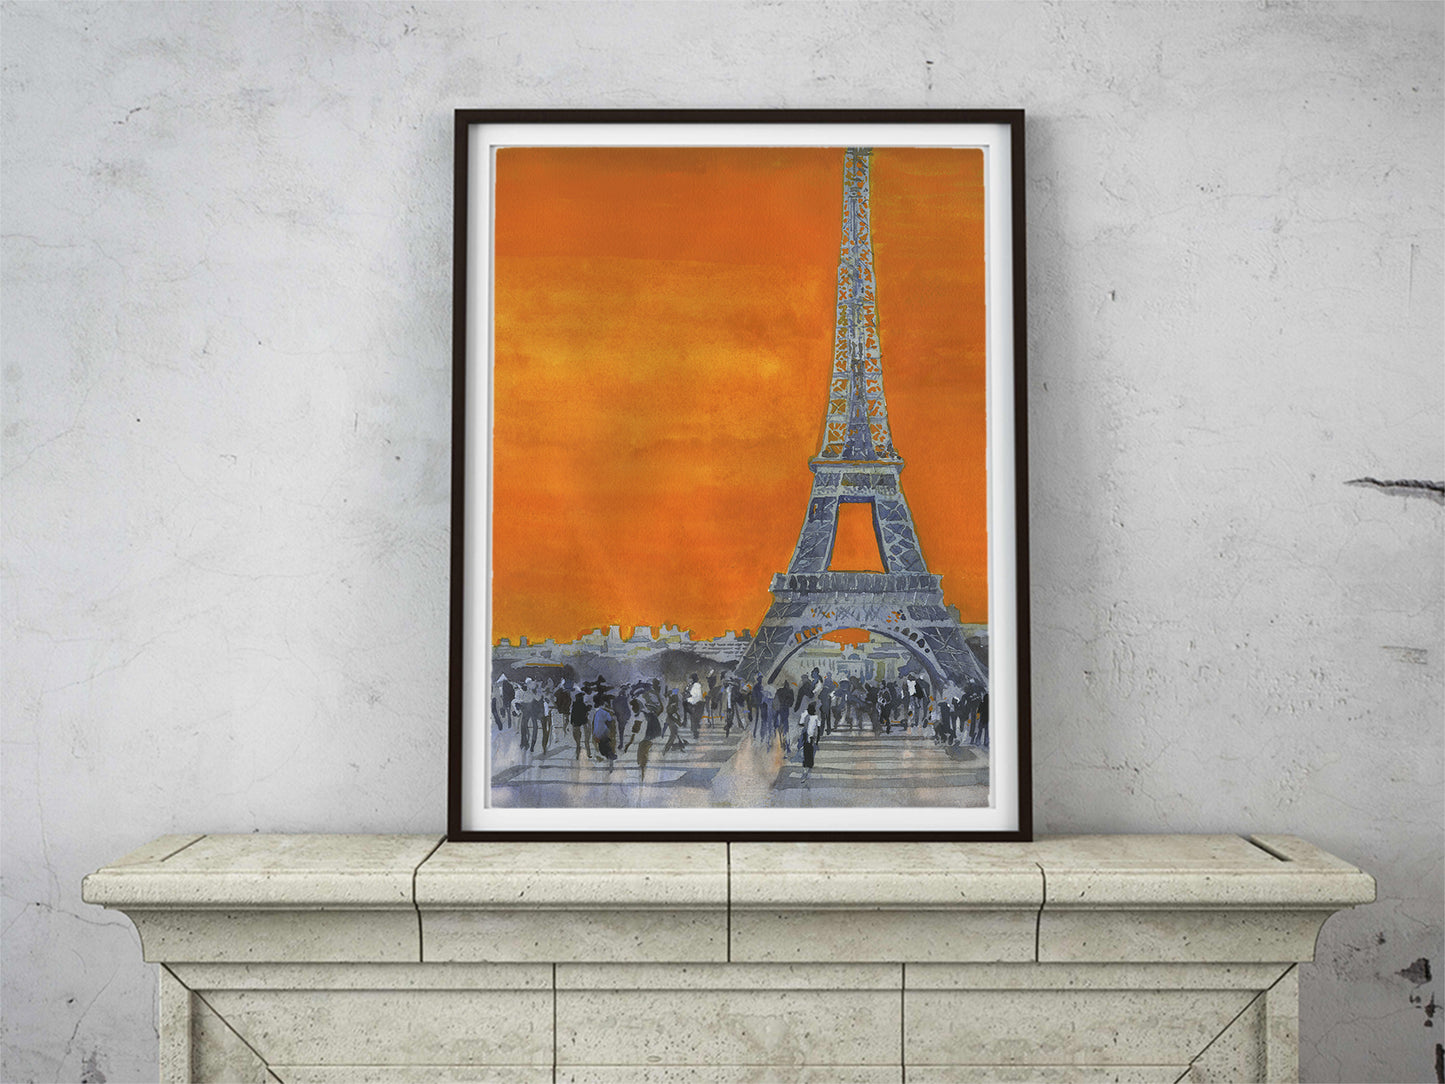 Eiffel Tower at sunset in Paris, France.  French landscape Parisian artwork home decor Europe (original)